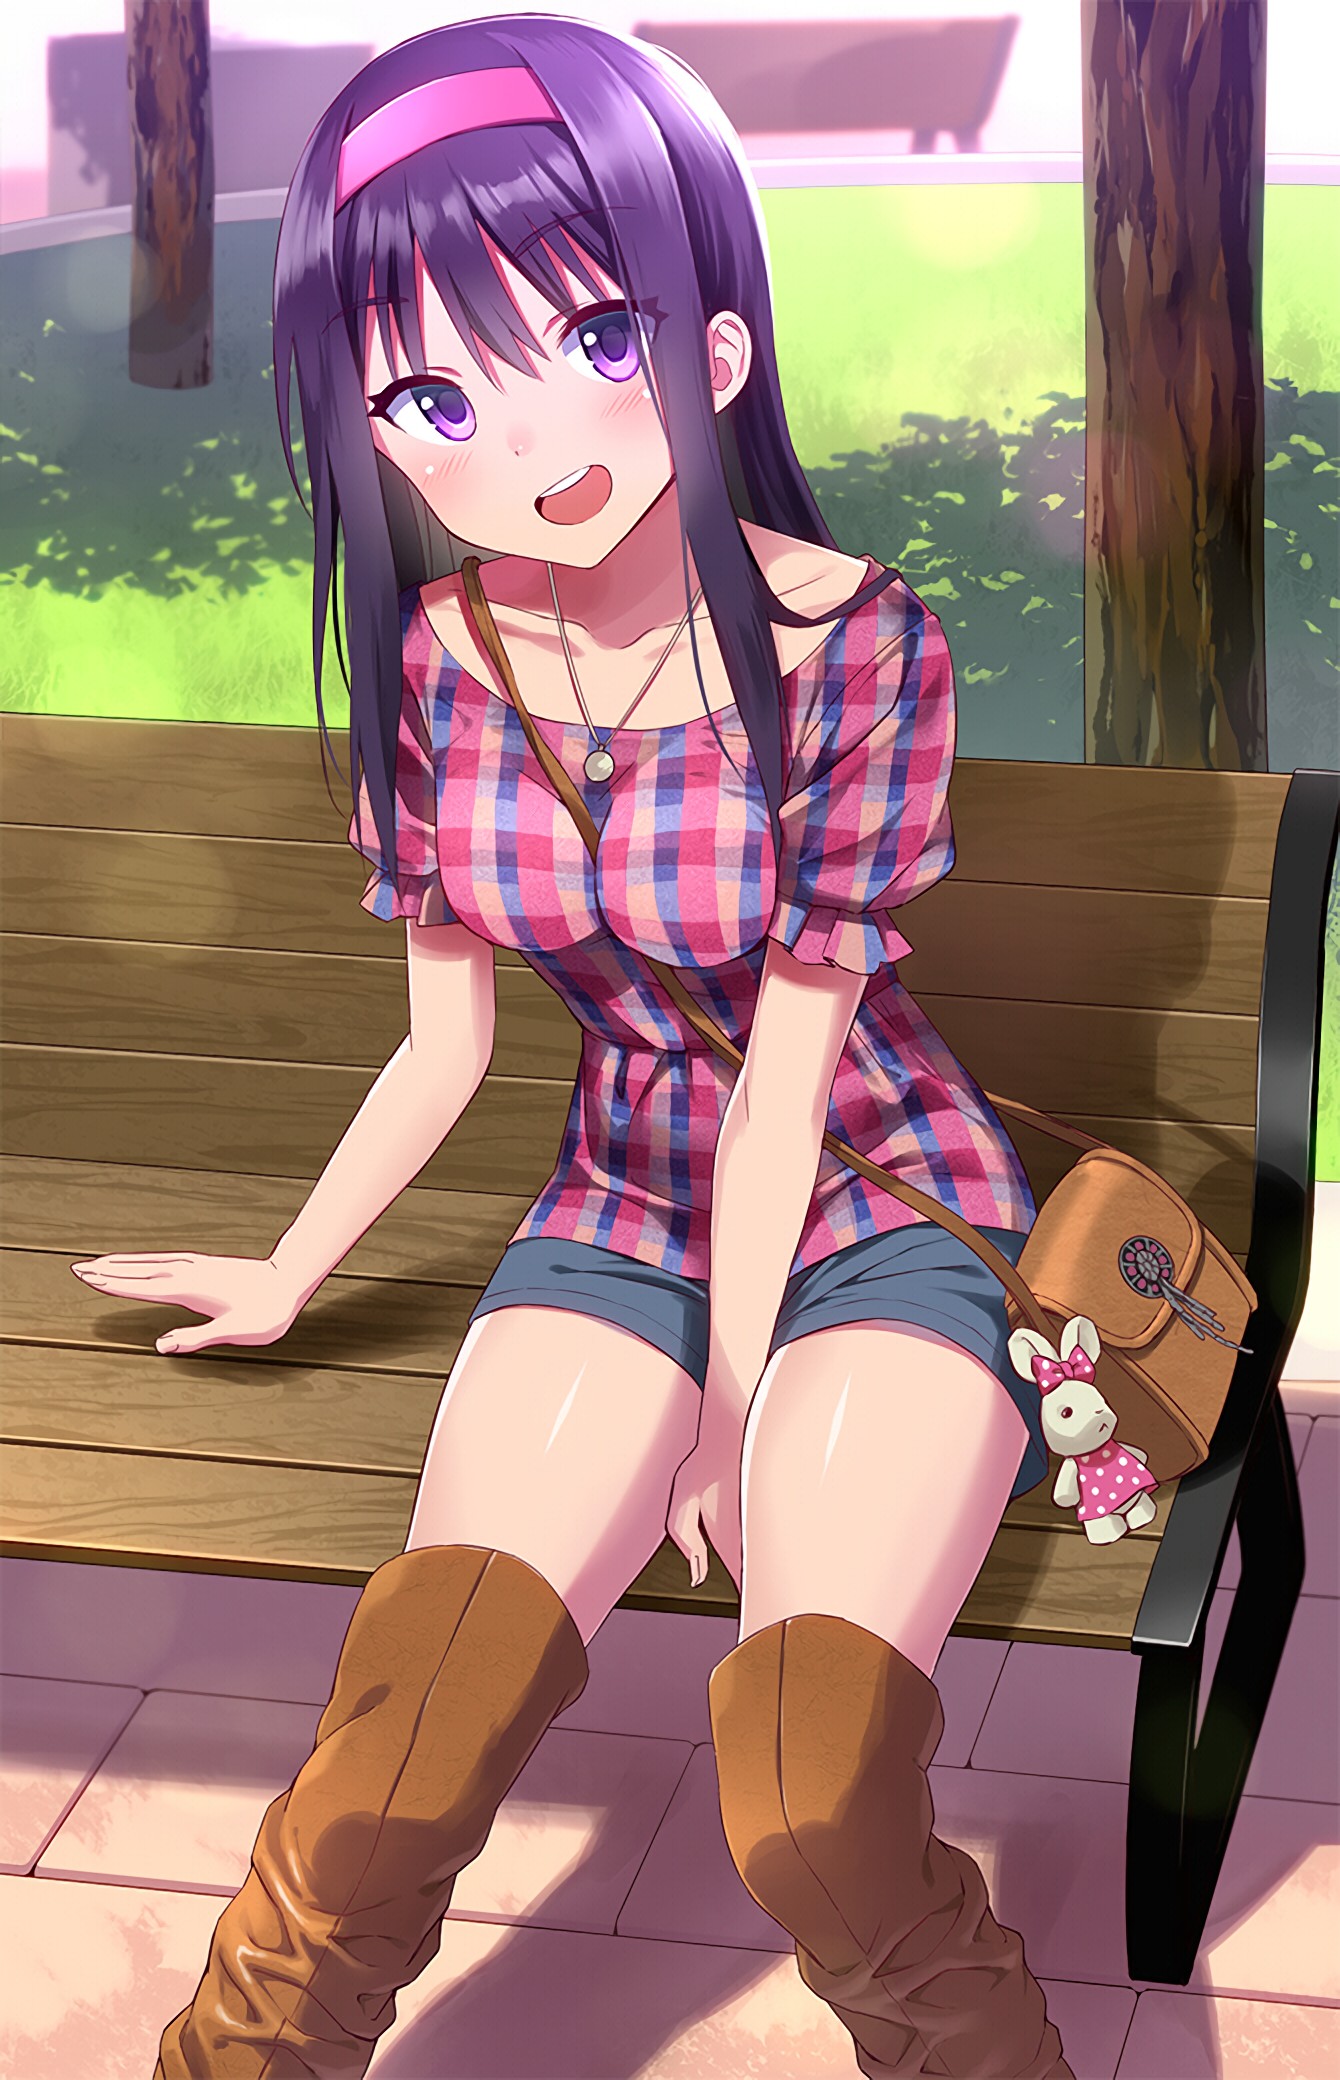 long hair, Purple hair, Purple eyes, Anime, Anime girls, Park, Shorts, Zettai ryouiki Wallpaper